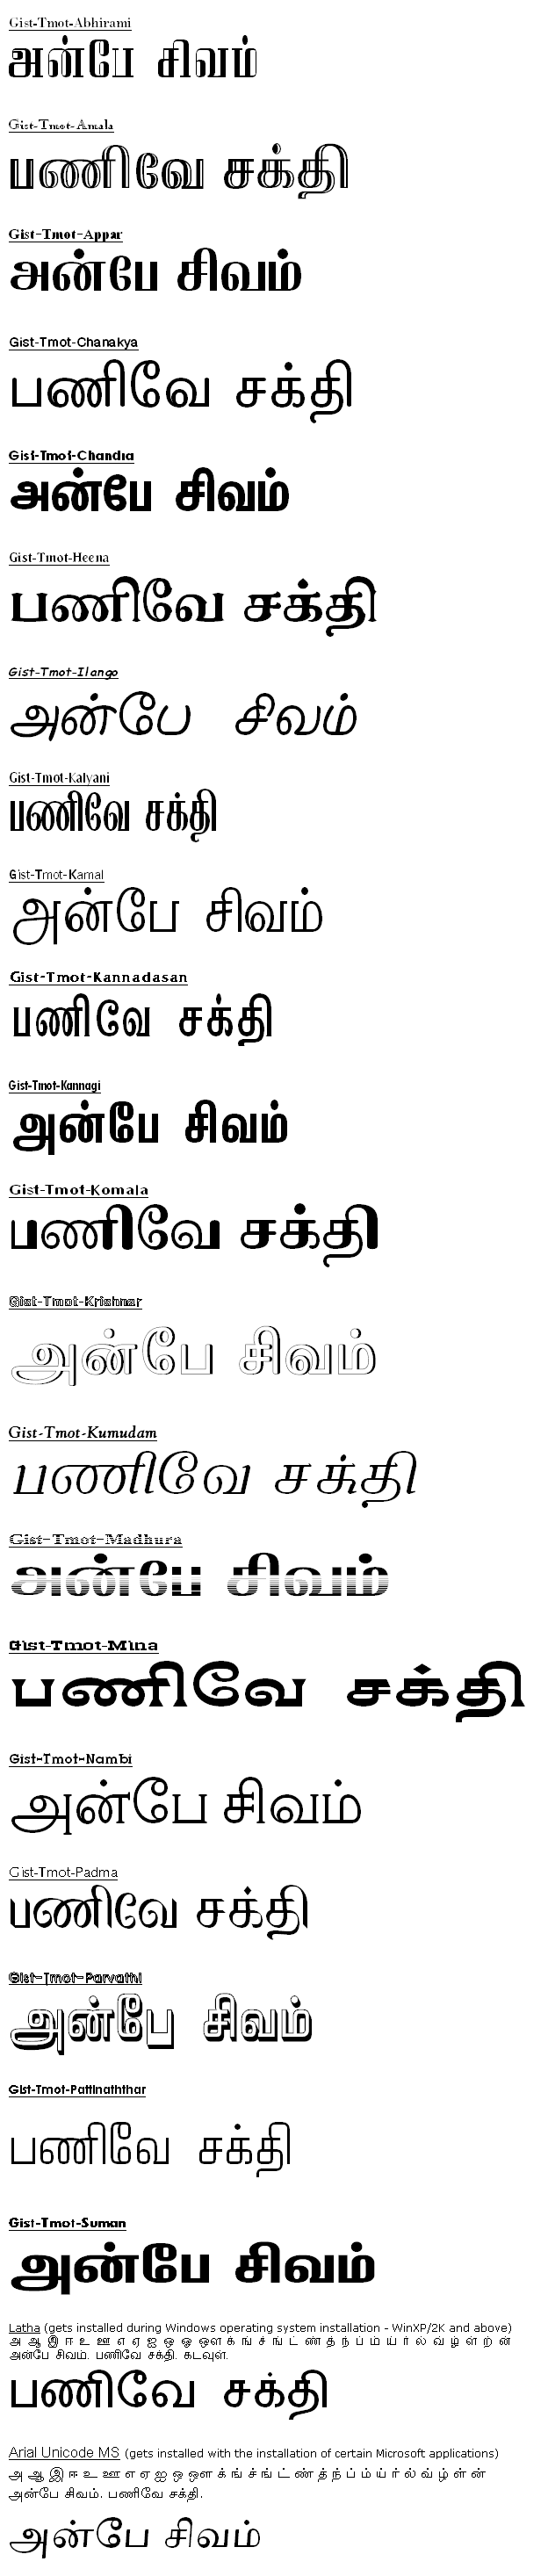 Vanavil tamil software 6.0